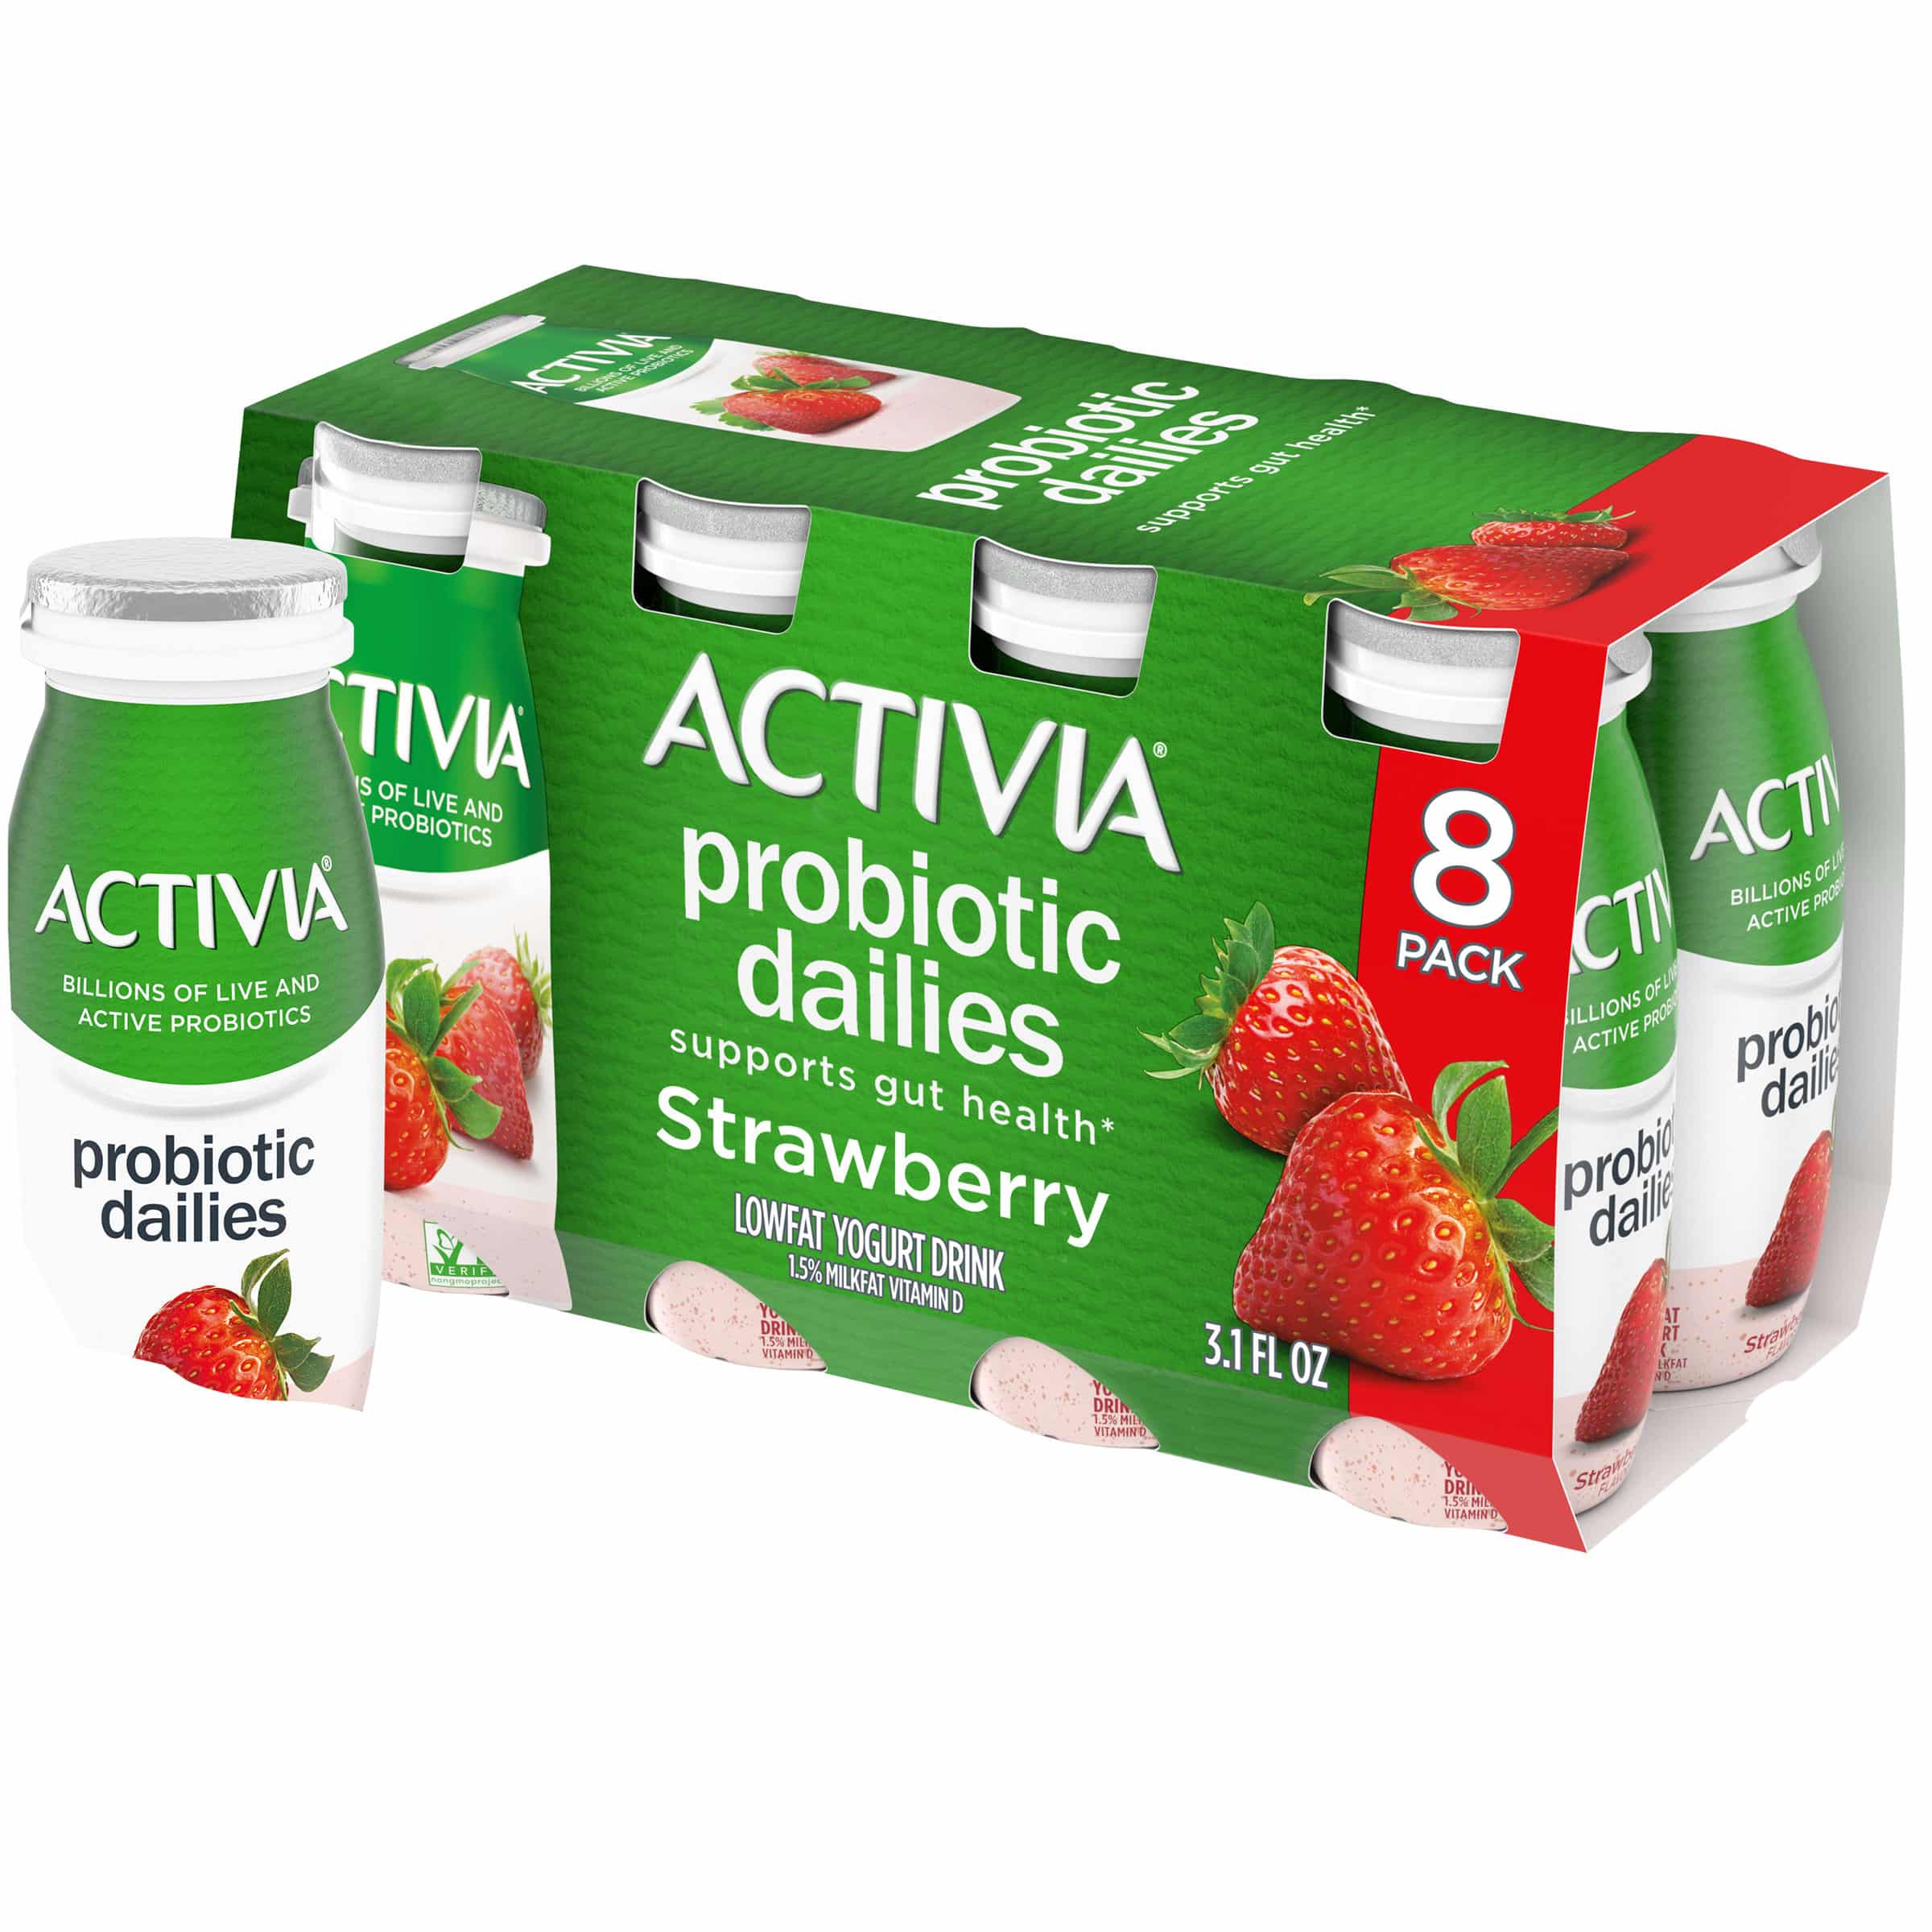 Activia Probiotic Dailies Strawberry Yogurt Drink, 3.1 Oz., 8 Count ...